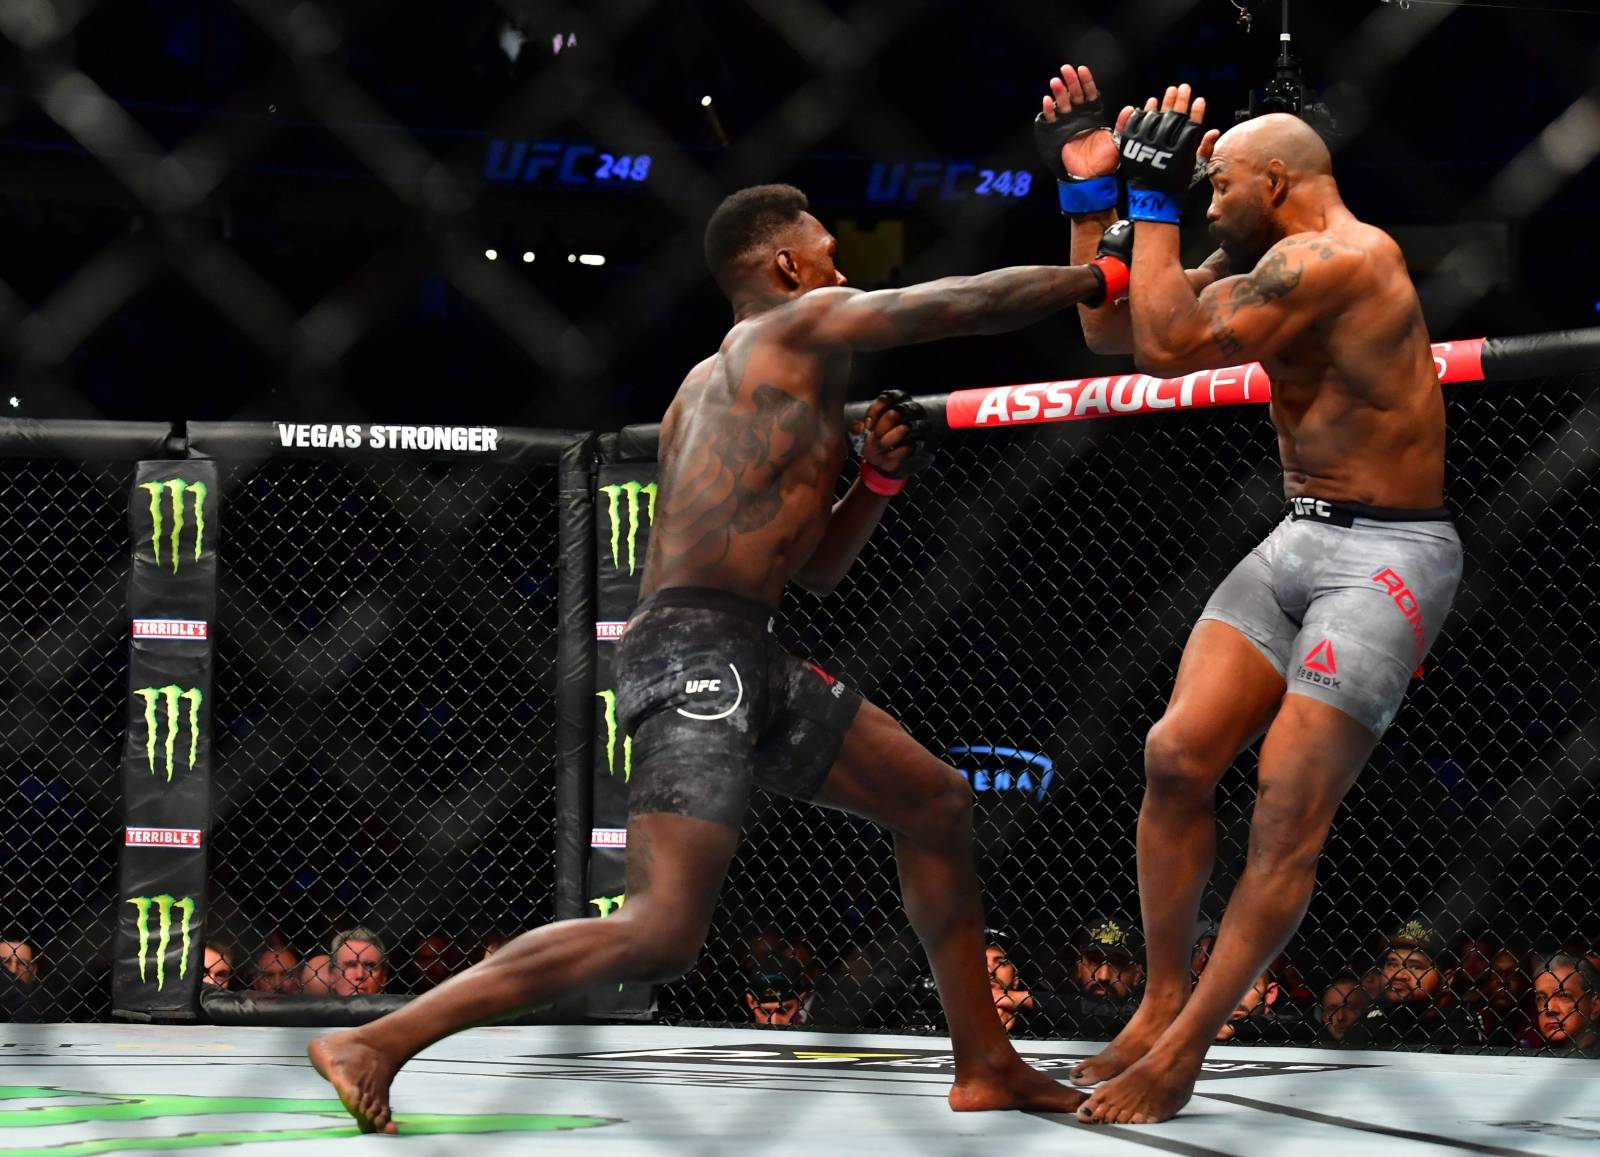 MMA: UFC 248-Adesanya vs Romero